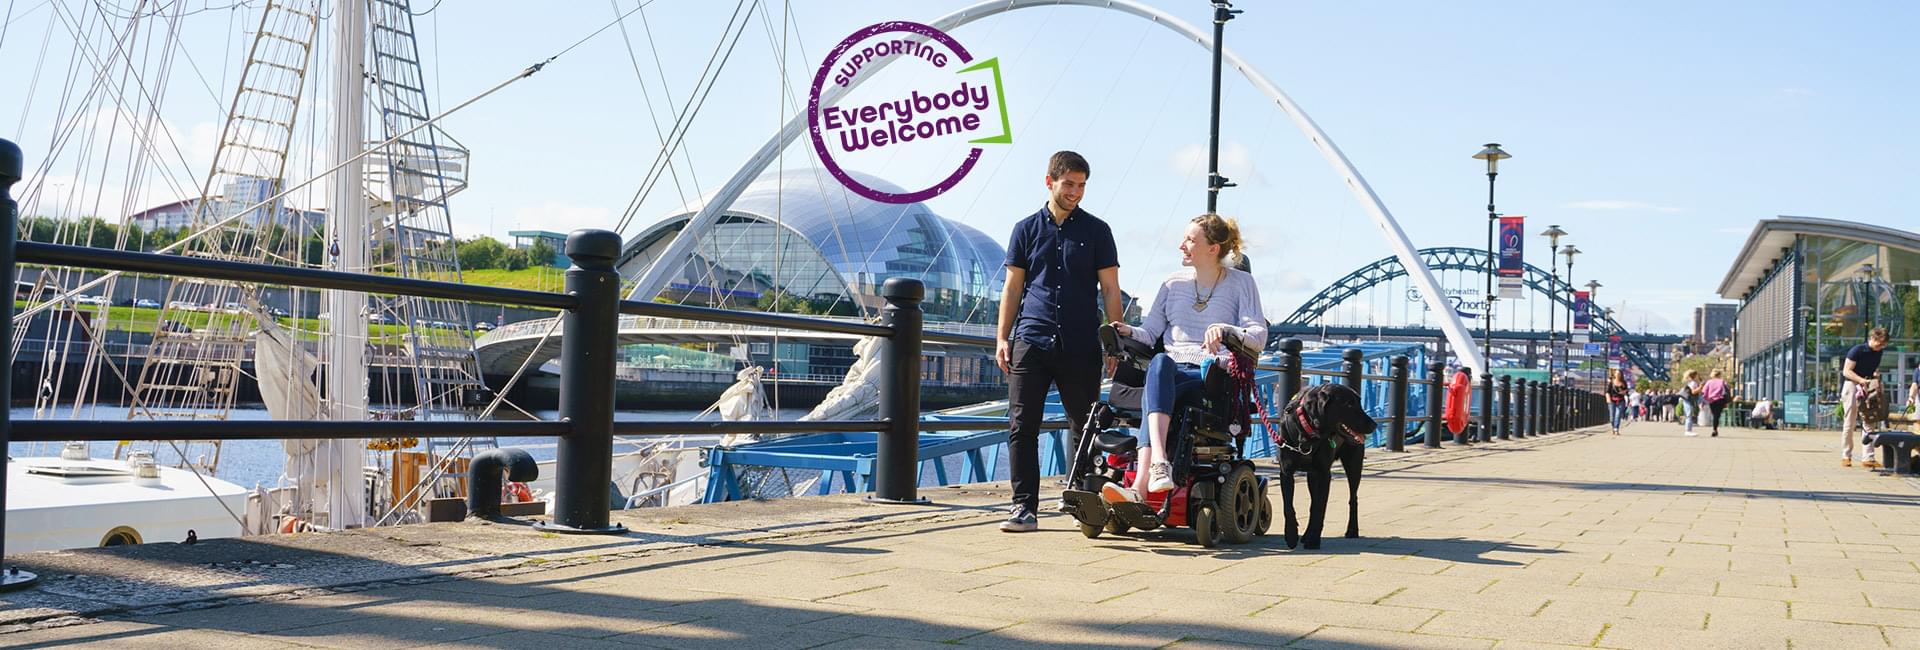 Accessiblity in Newcastle Gateshead Everybody Welcome logo